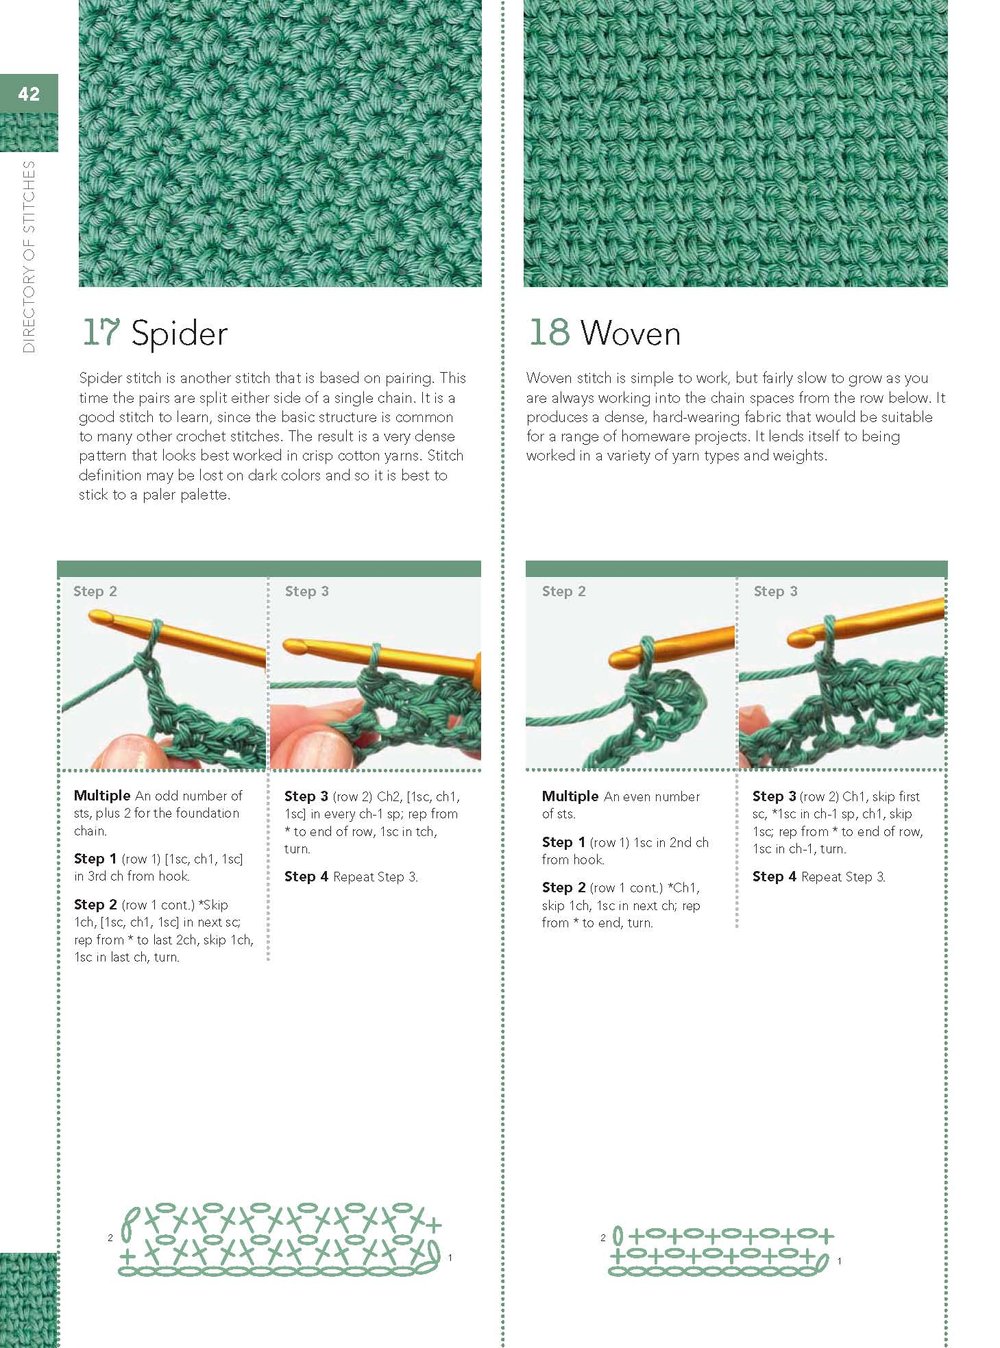 Crochet Stitch Dictionary by Sarah Hazell, Paperback